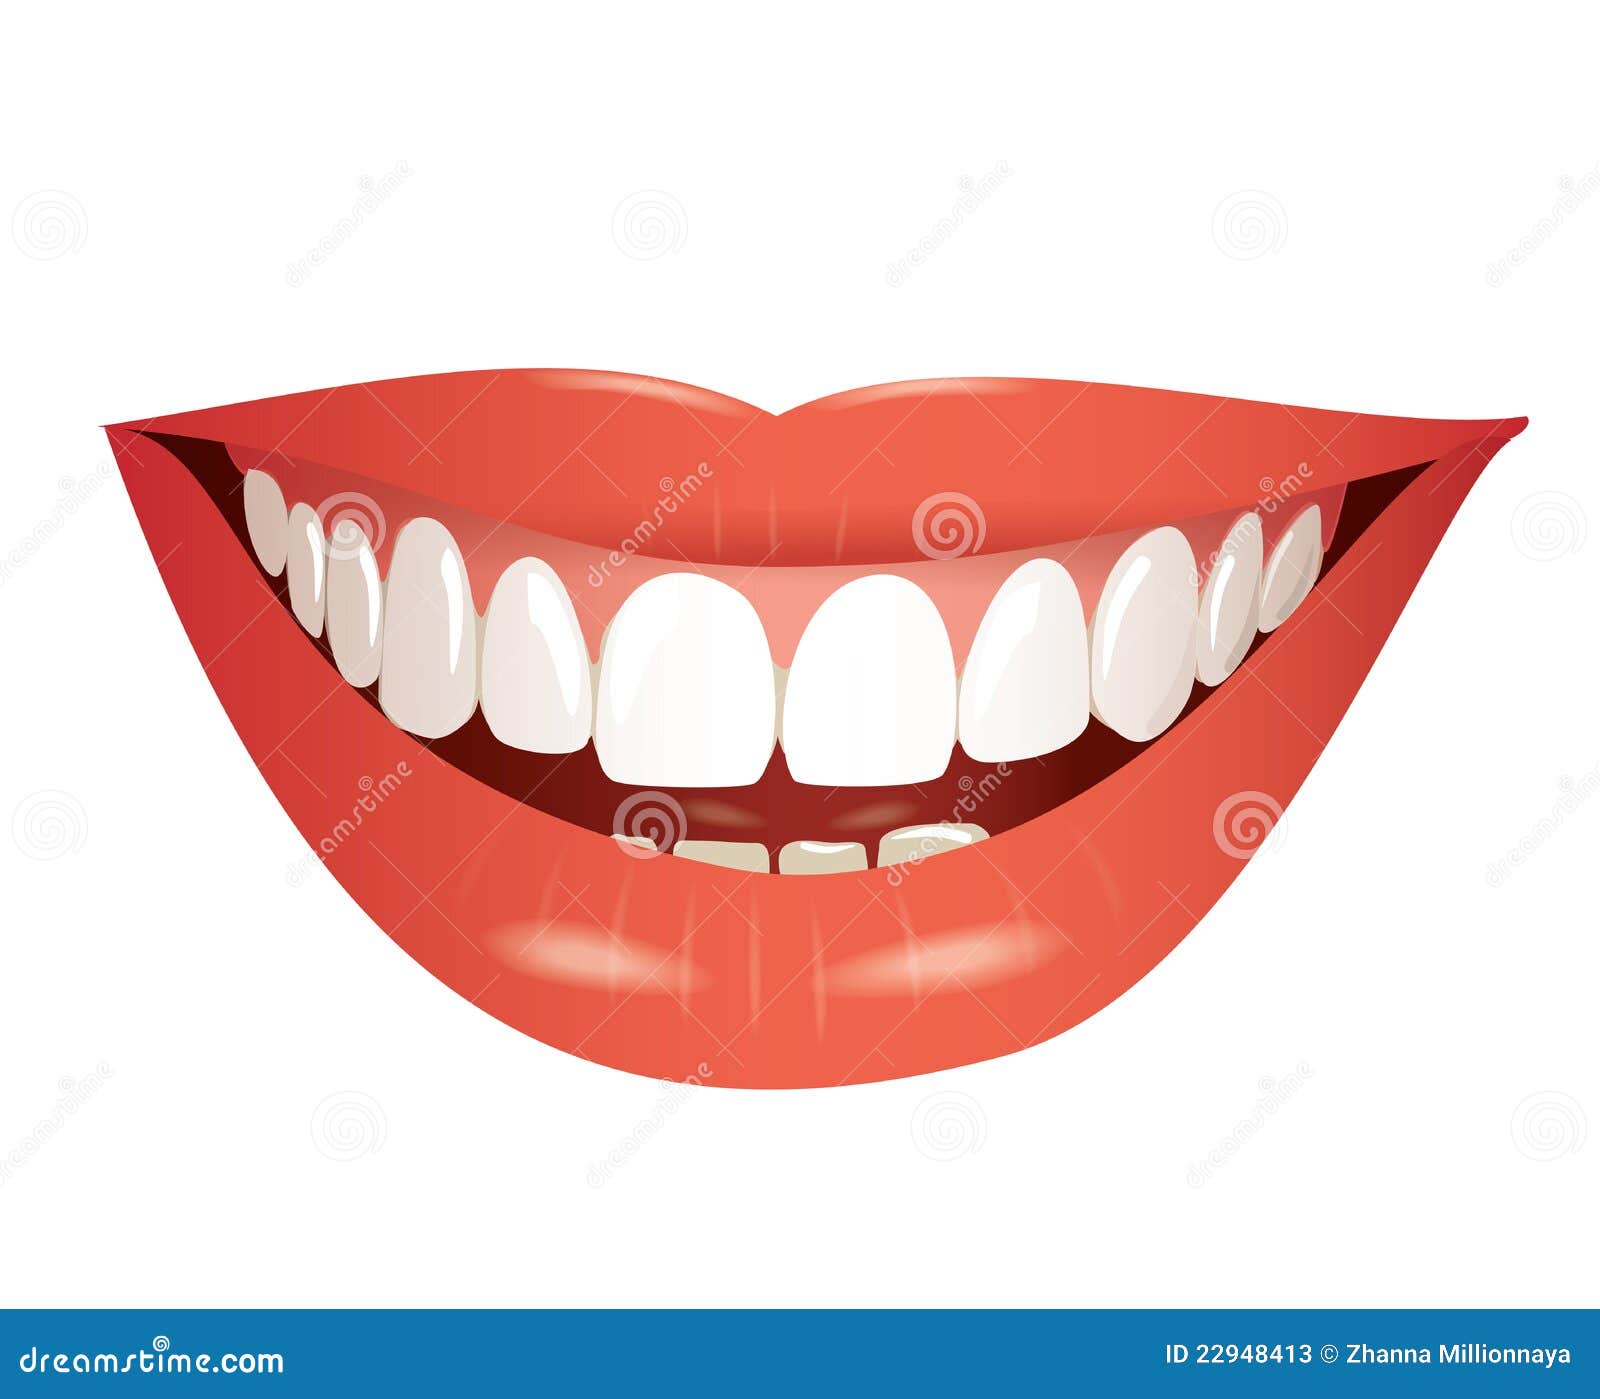 clipart big smile teeth - photo #43